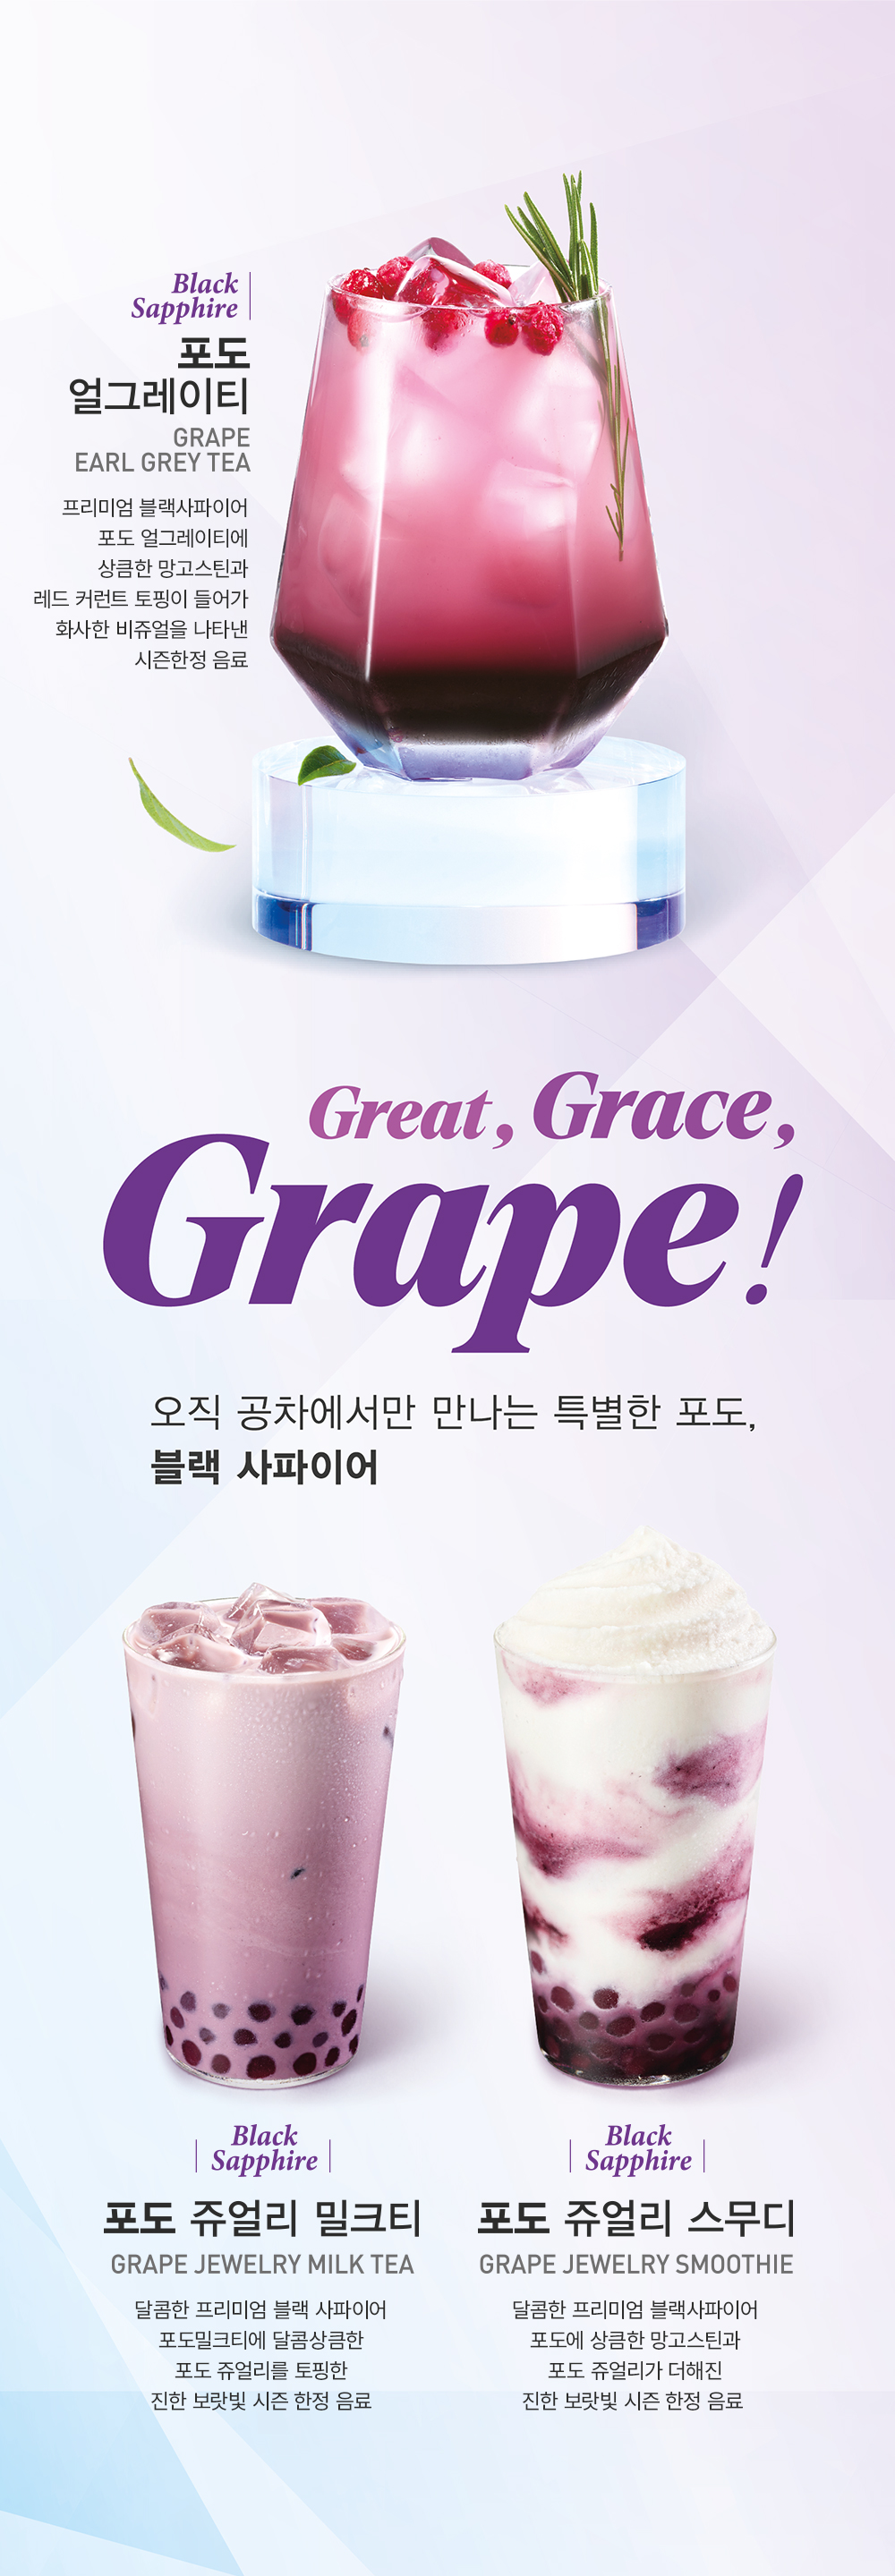 Great,Grace,Grape